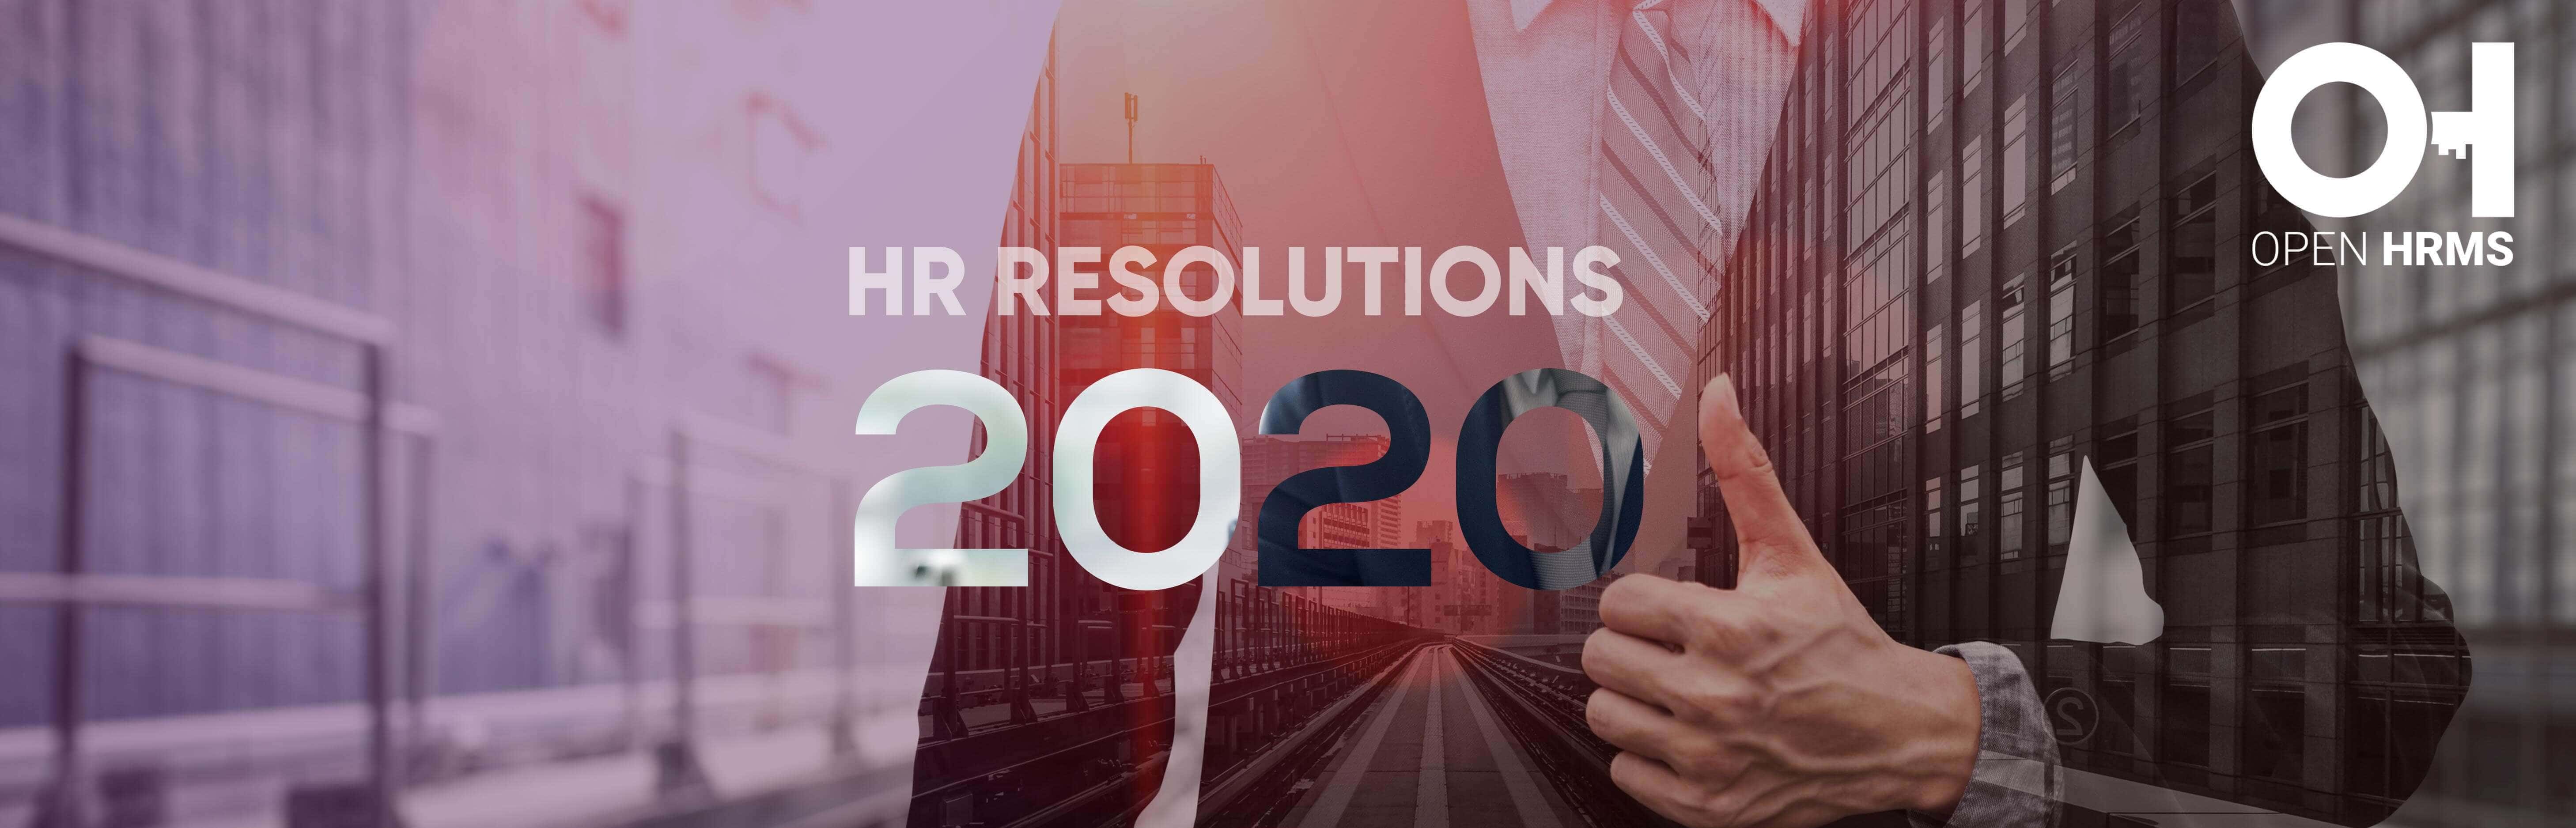 hr-resolution-2020.jpg